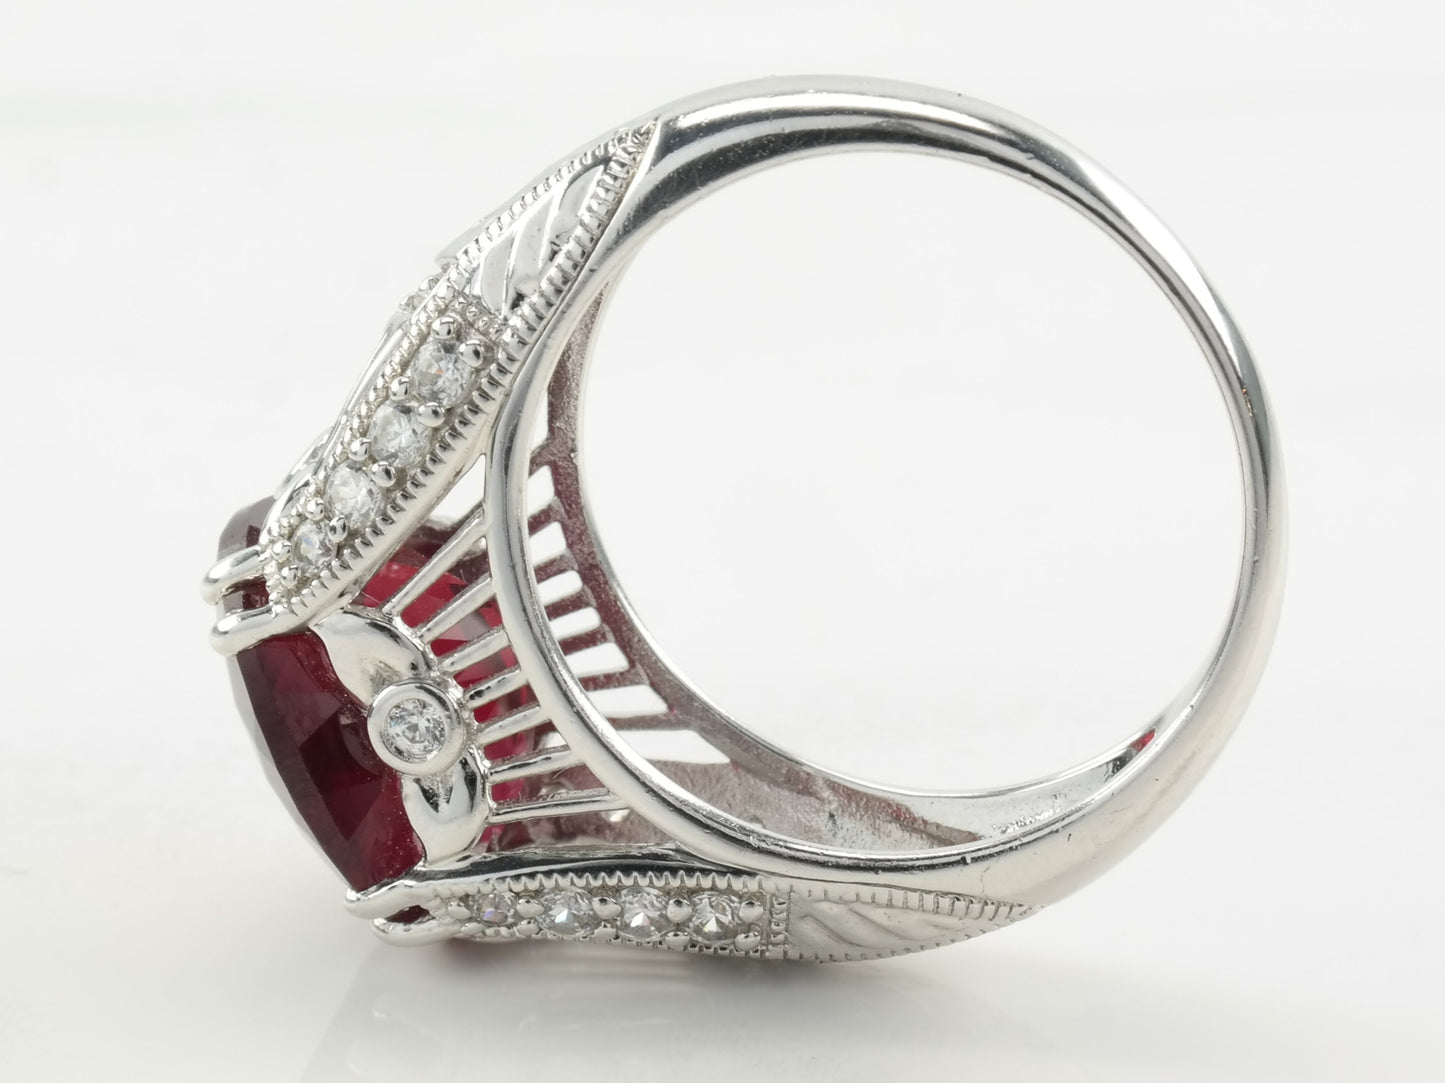 Vintage Sterling Silver Ring Ruby, Gemstones Size 7